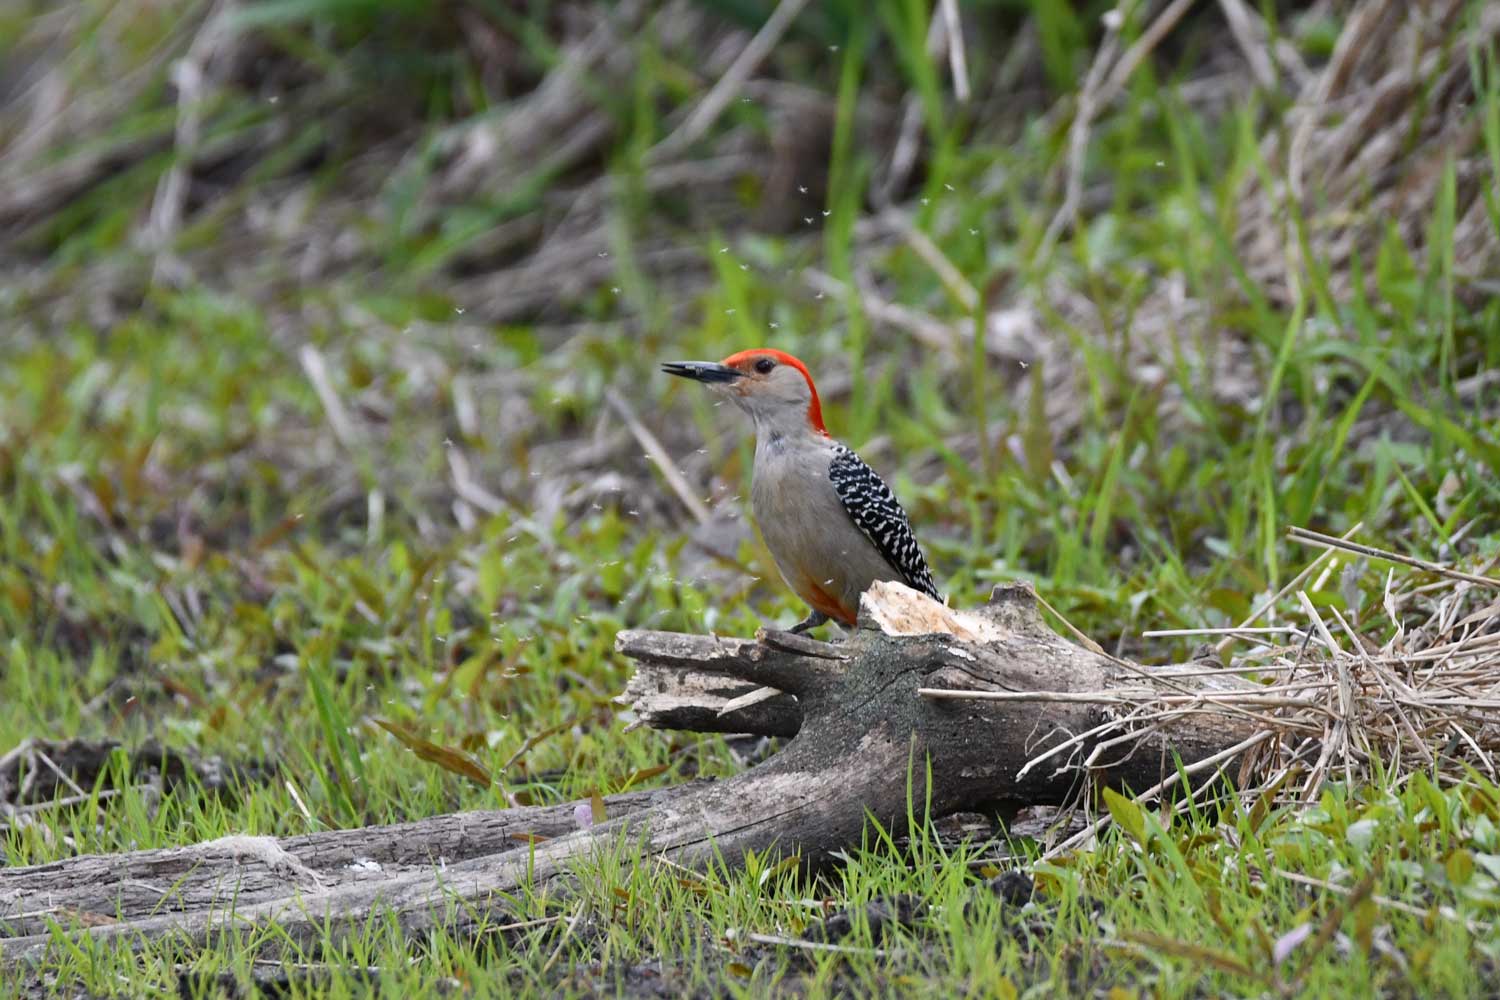 Red bellied woodpecker perched on a fallen branch.